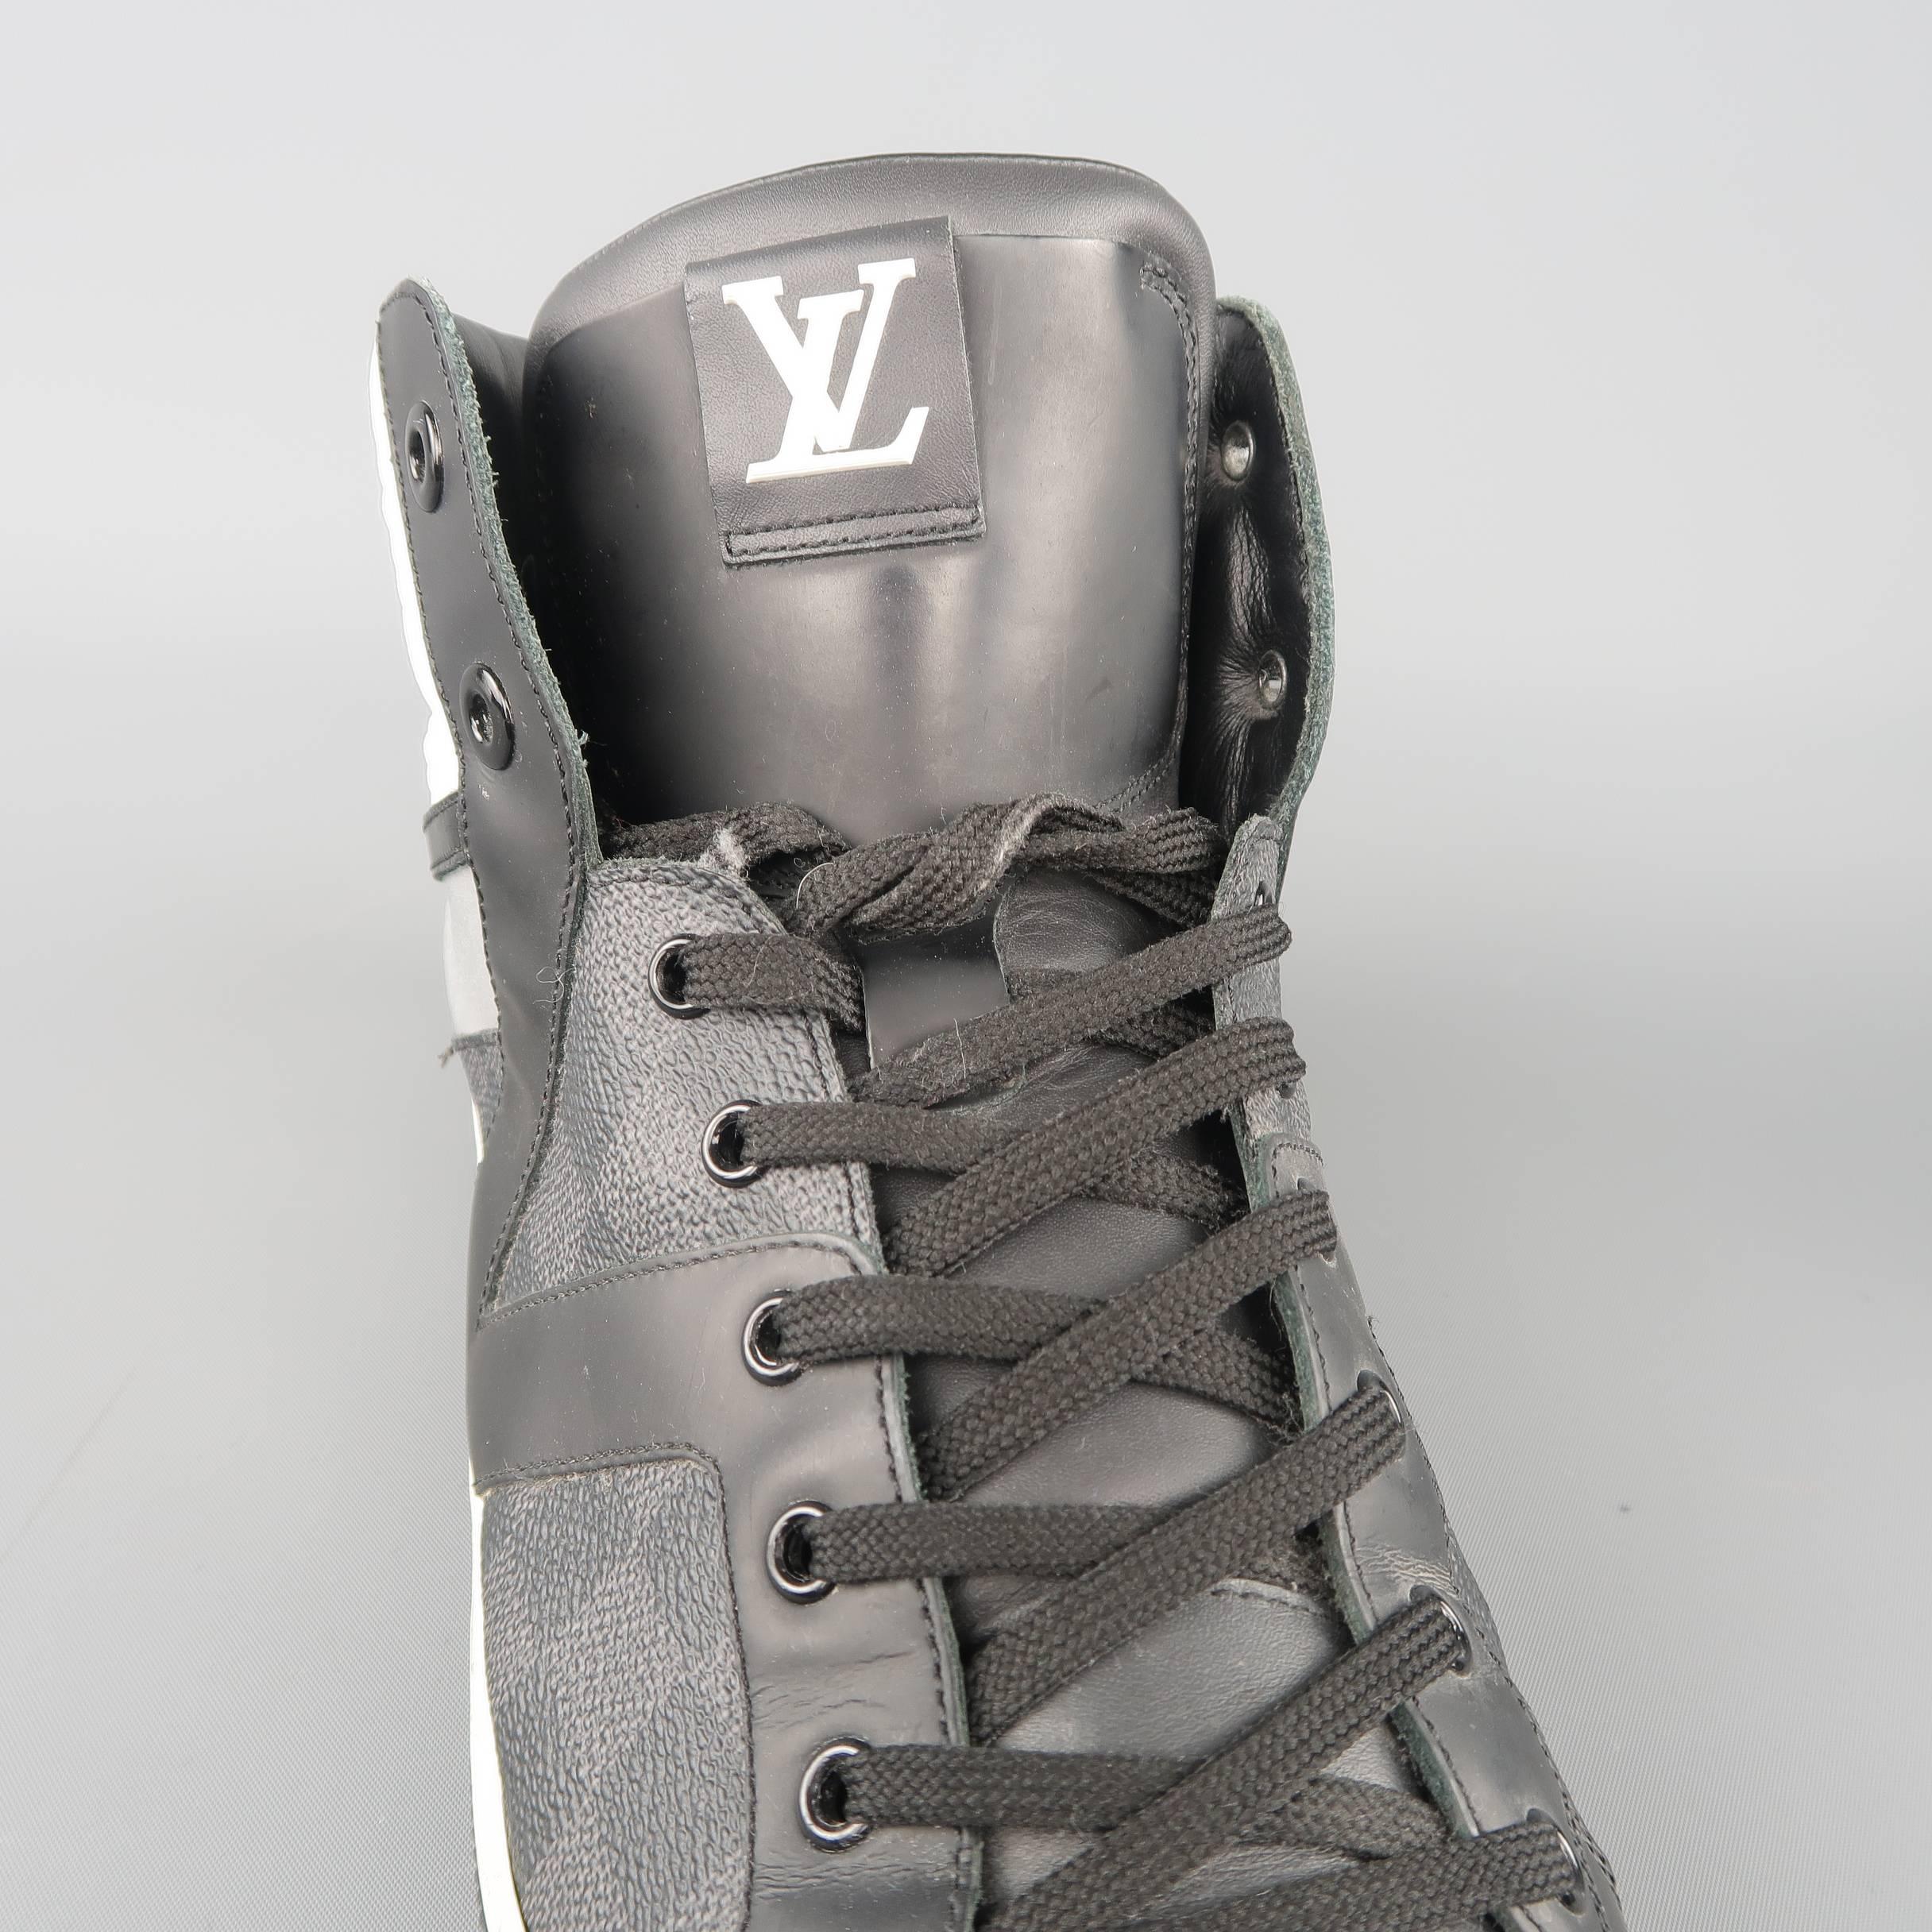 Men's Louis Vuitton High Top Sneakers